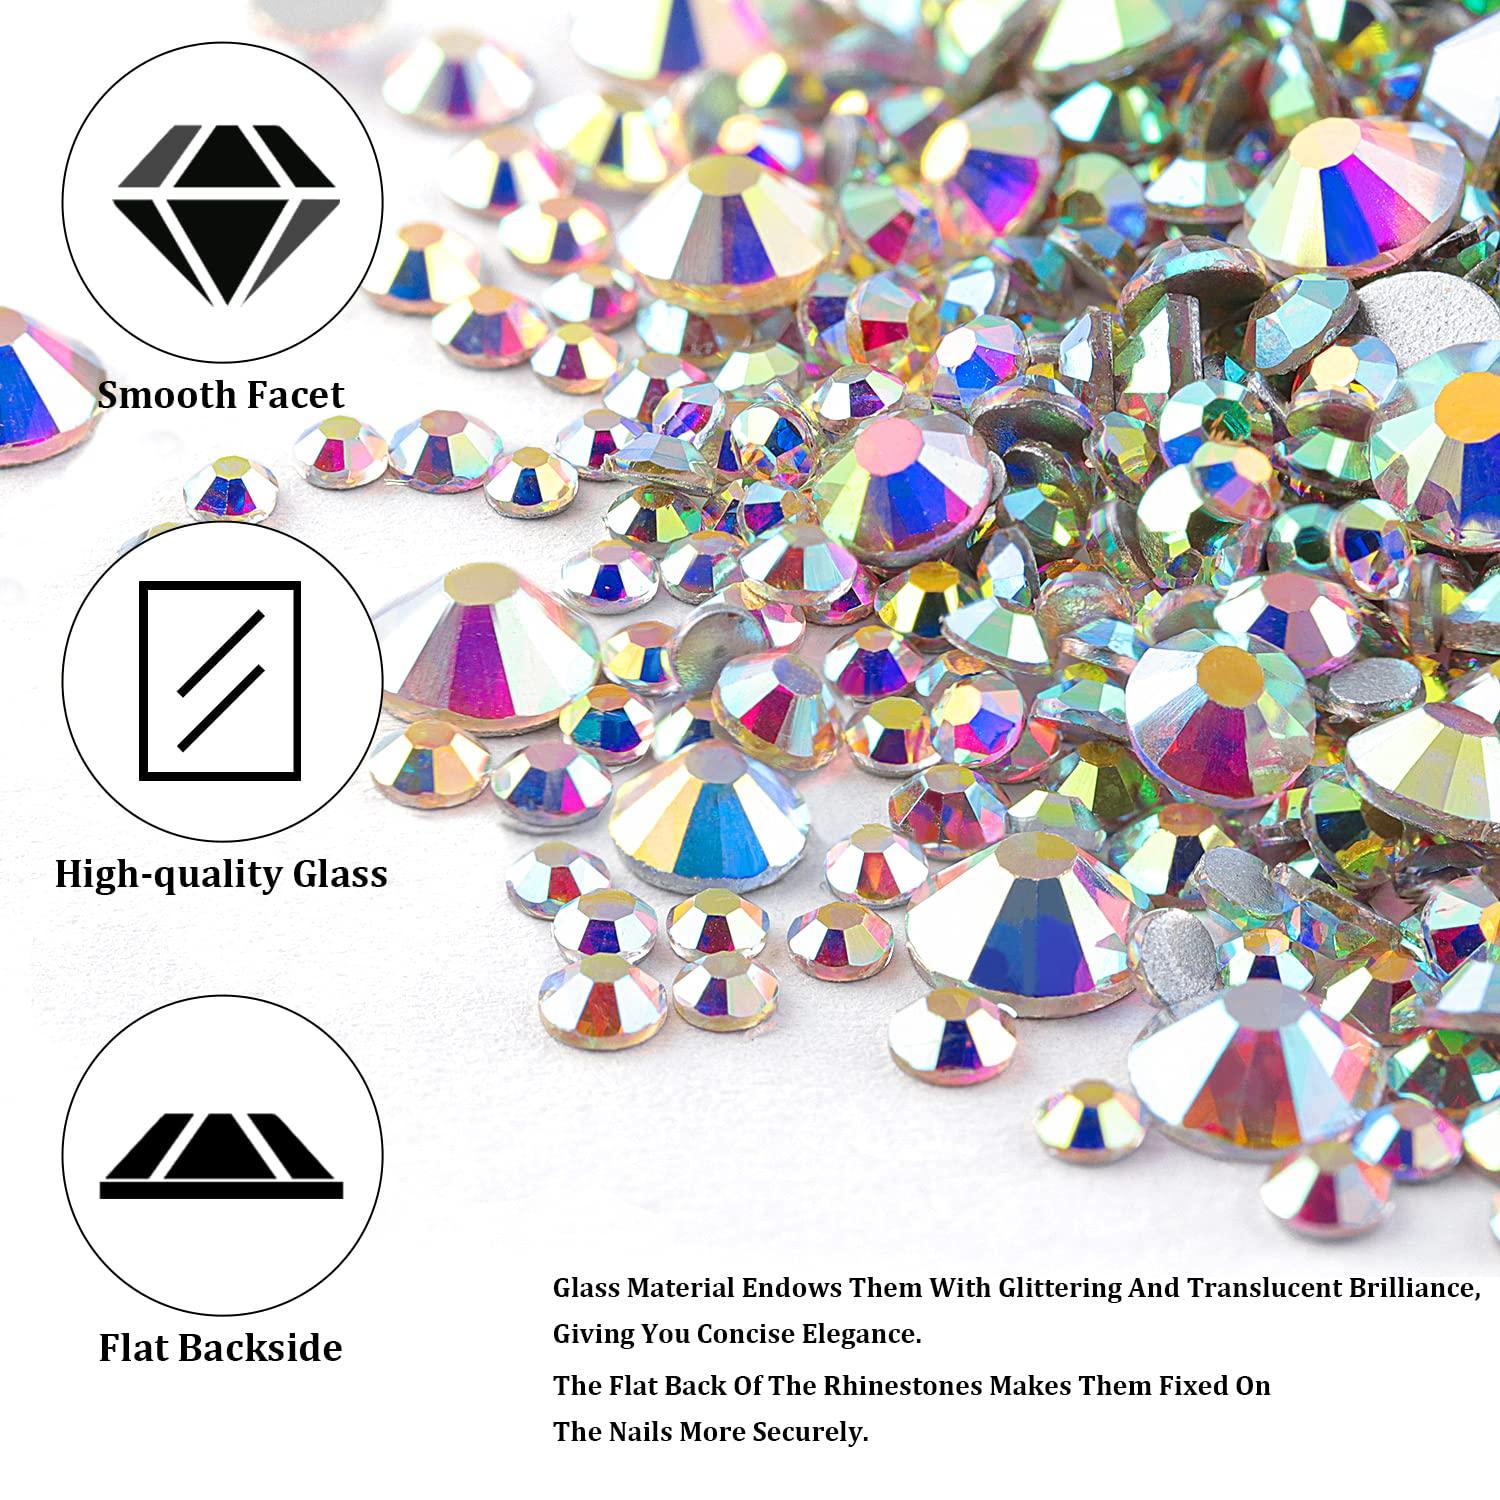 Multi Shapes 3D Glass AB Crystal Nail Art Rhinestones Kit with Flatback  Round Bead Charm Gem Stone Jewelry Diamond with Pickup Pen + Tweezer for